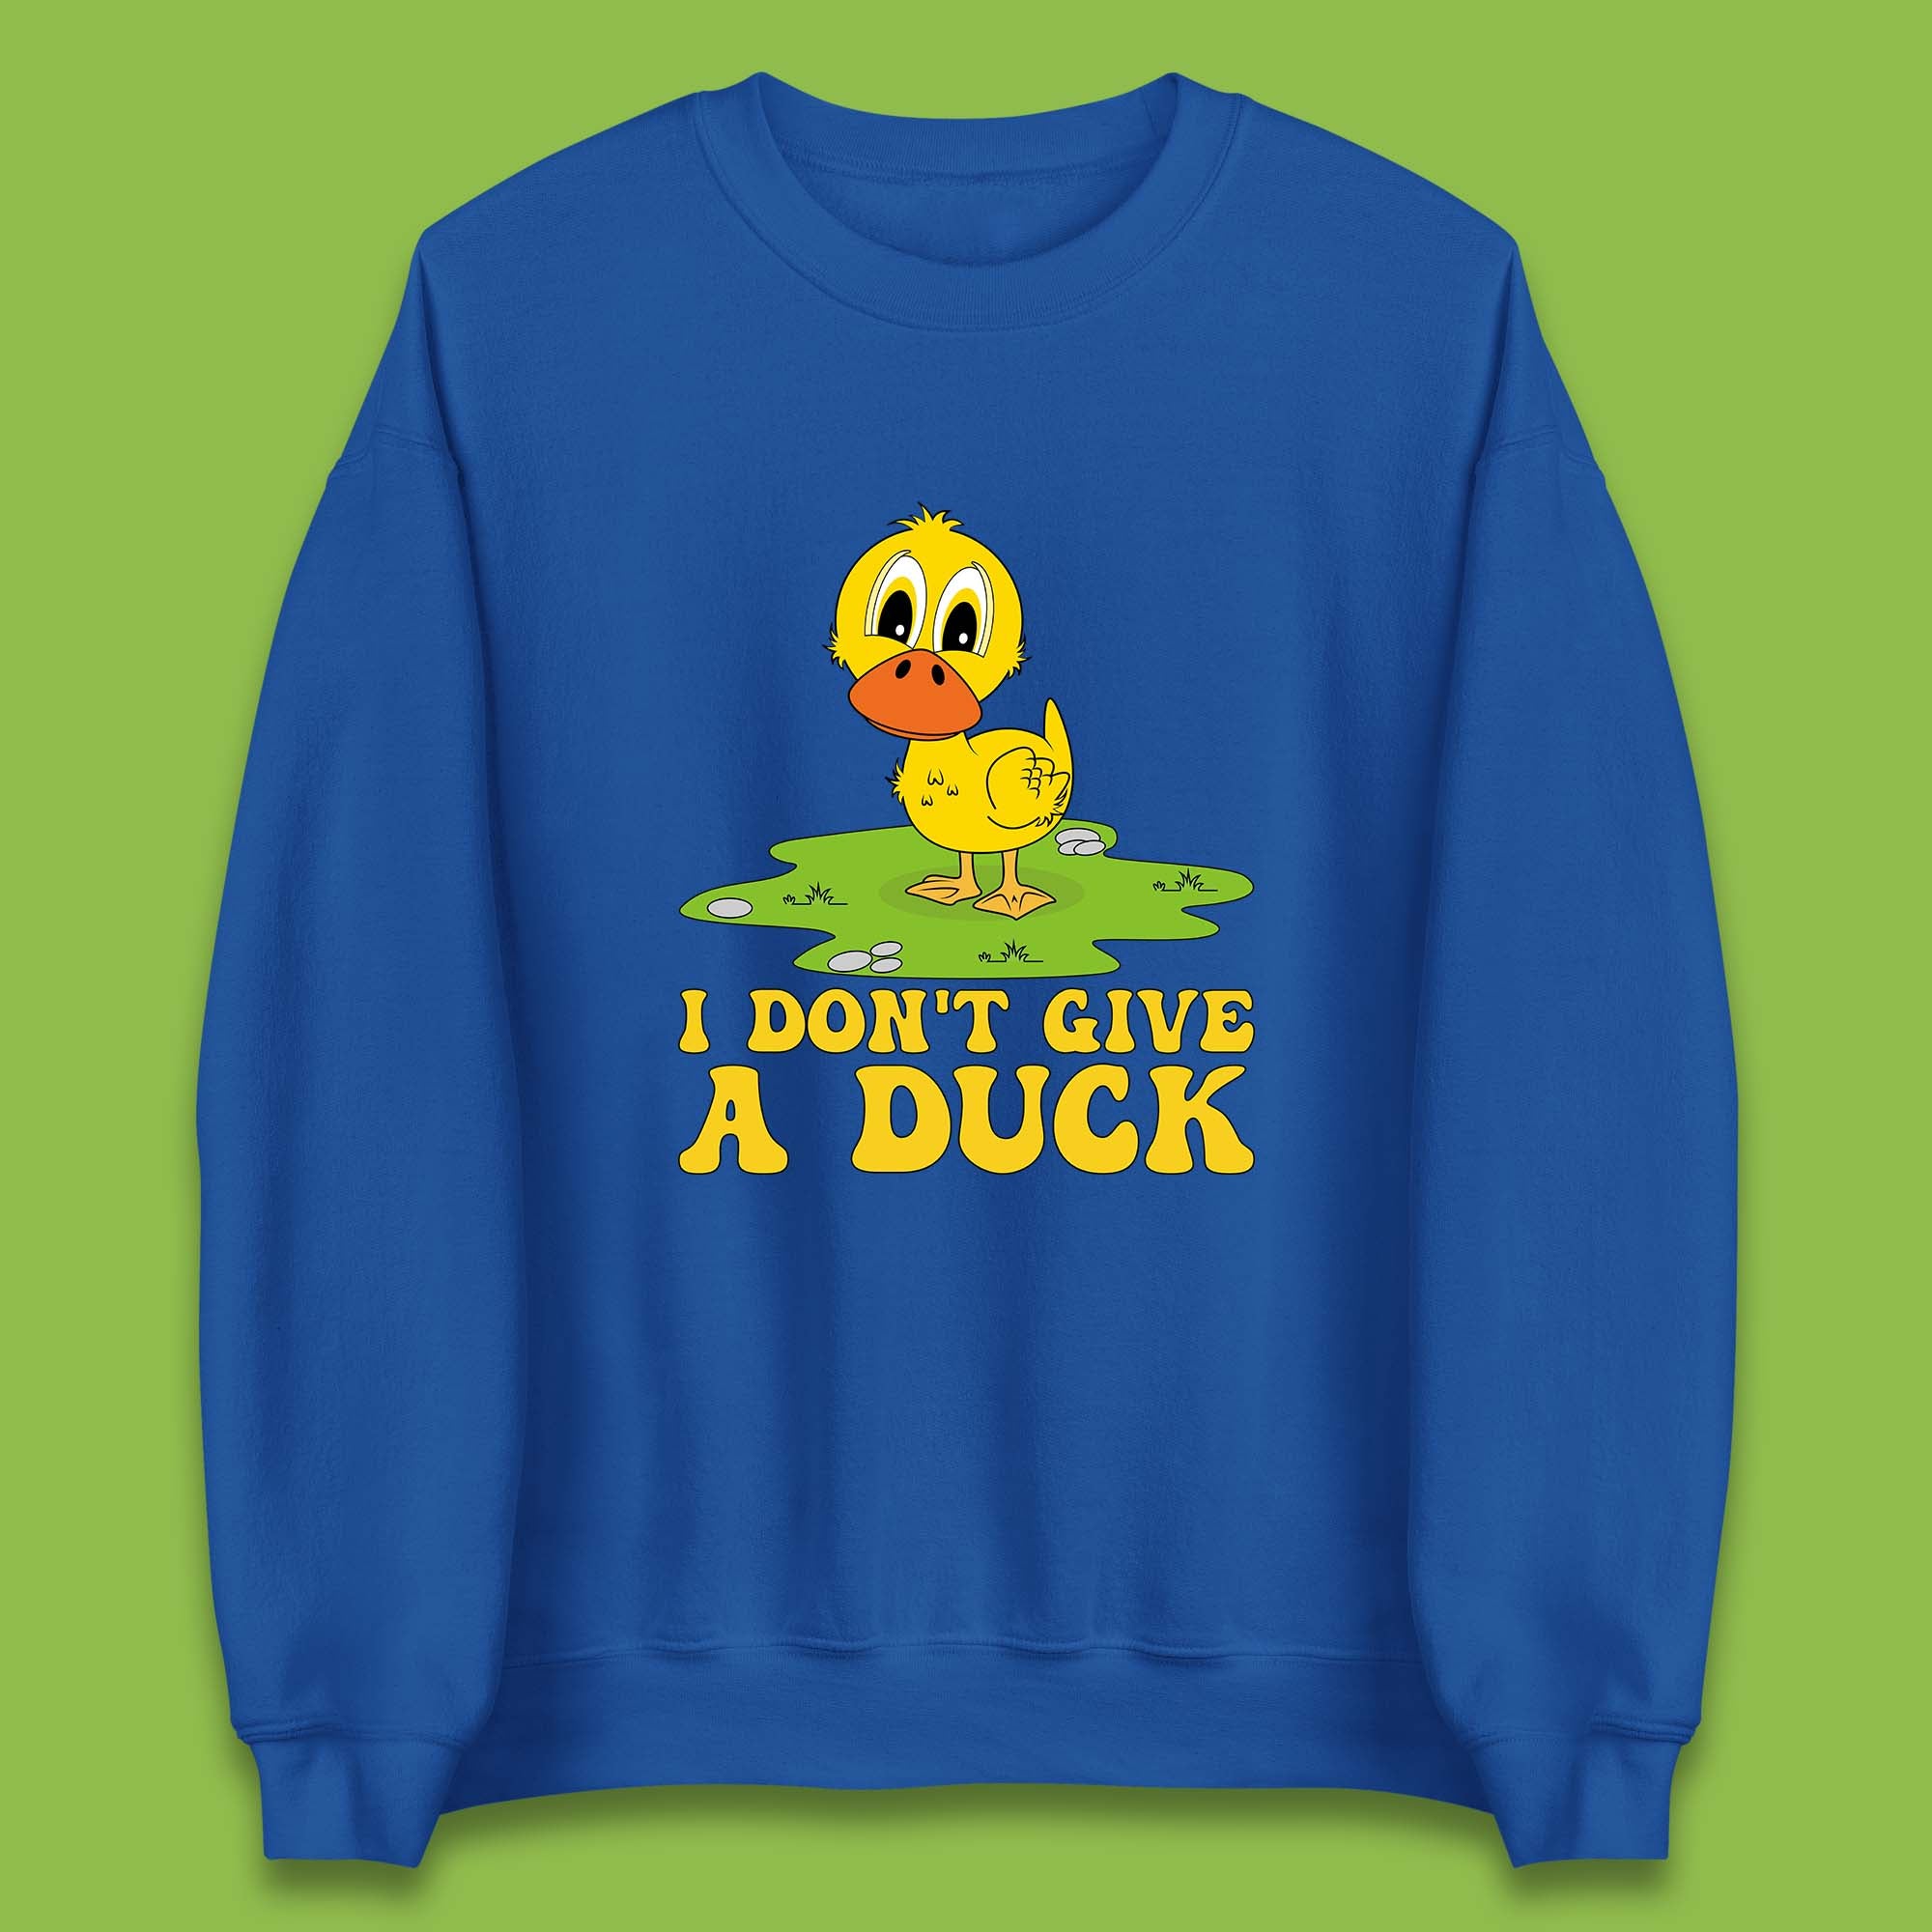 I Don't Give A Duck Funny Humor Rude Joke Novelty Unisex Sweatshirt